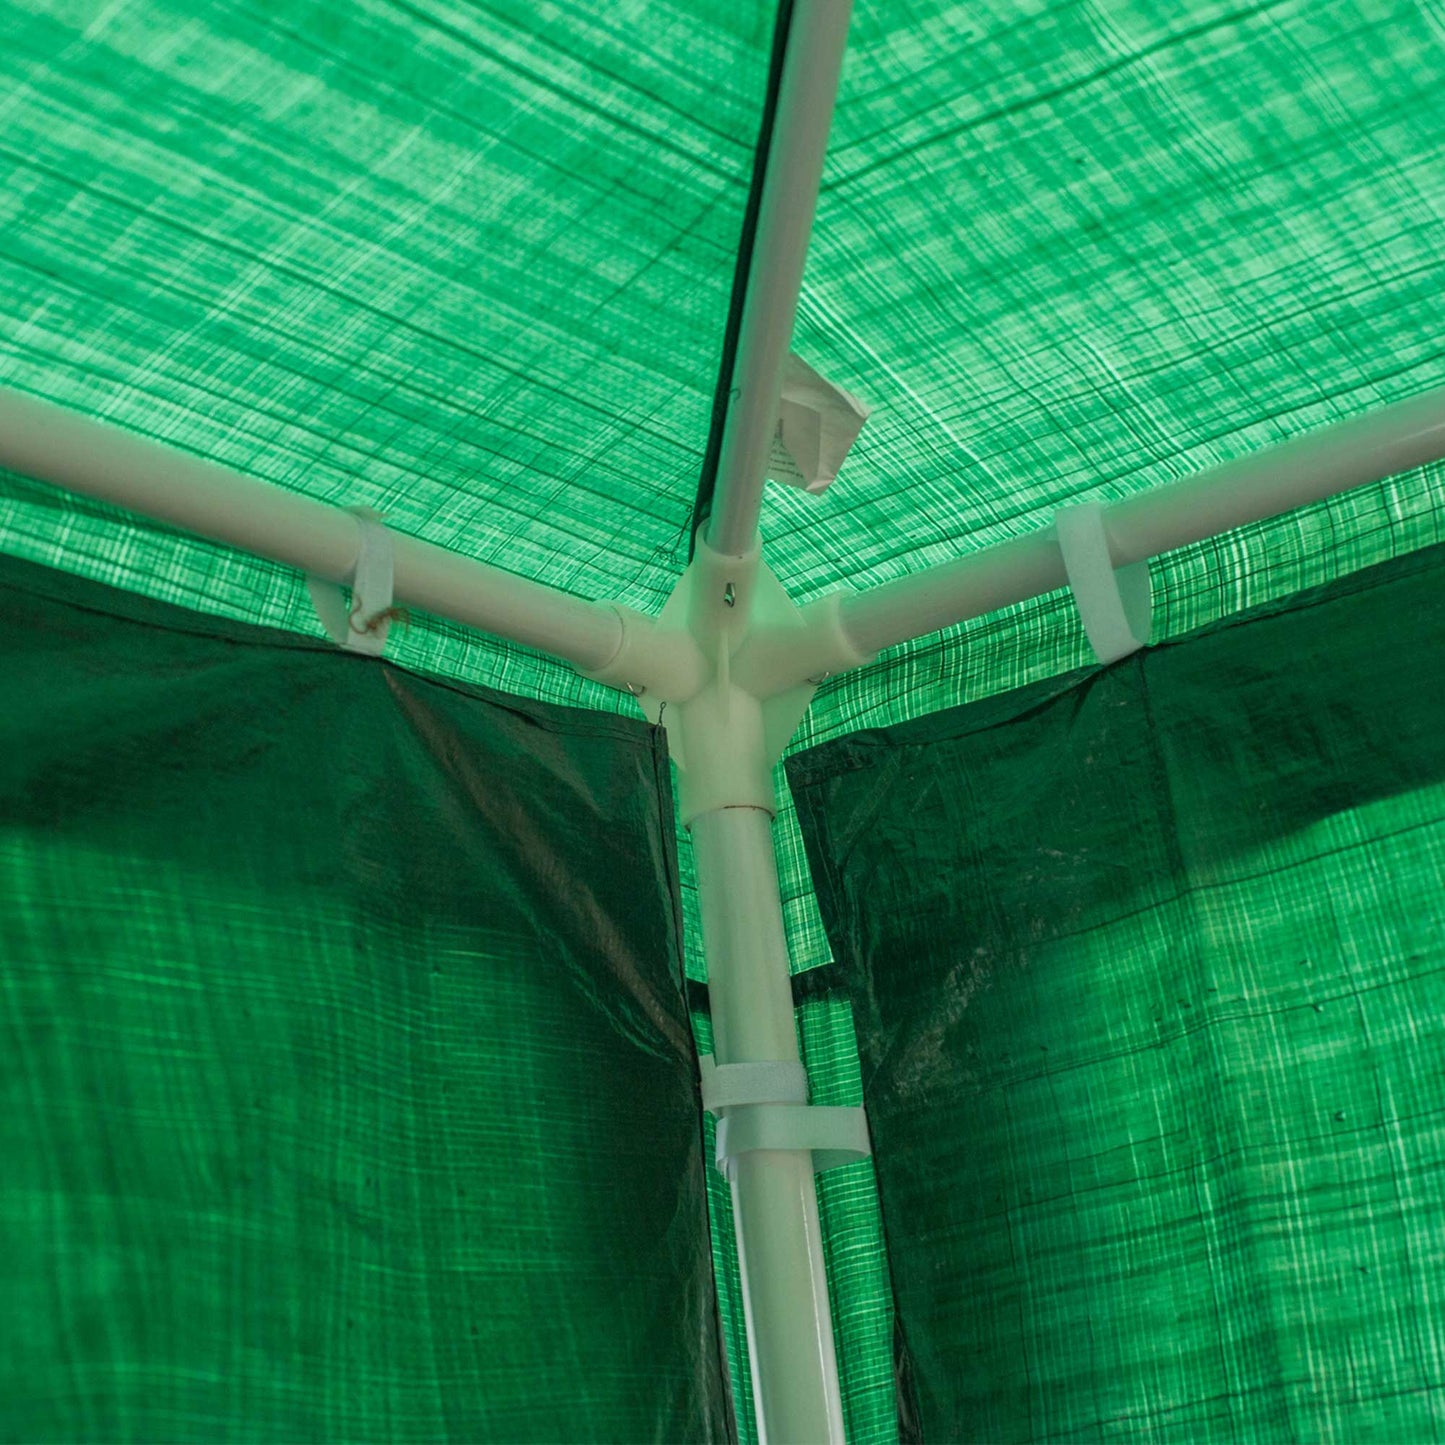 Outsunny 3m x 9m Gazebo Waterproof Green Wedding Canopy Outdoor